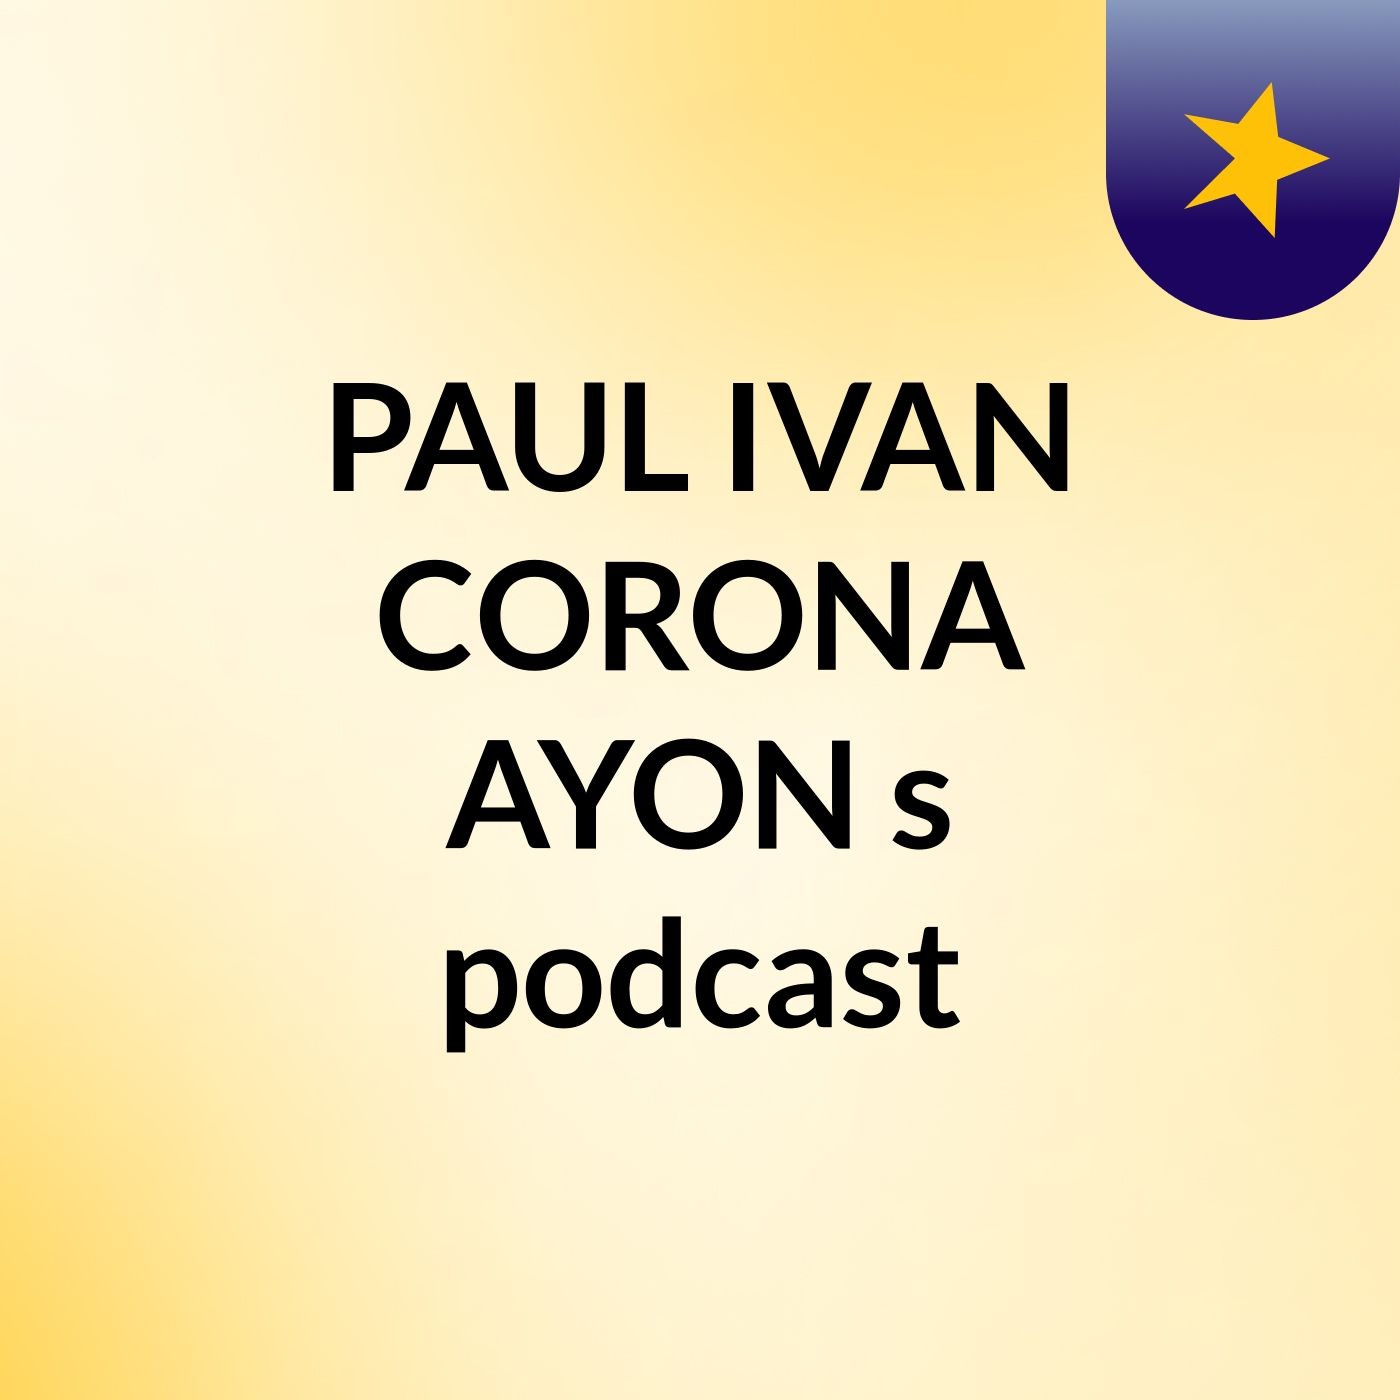 PAUL IVAN CORONA AYON's podcast